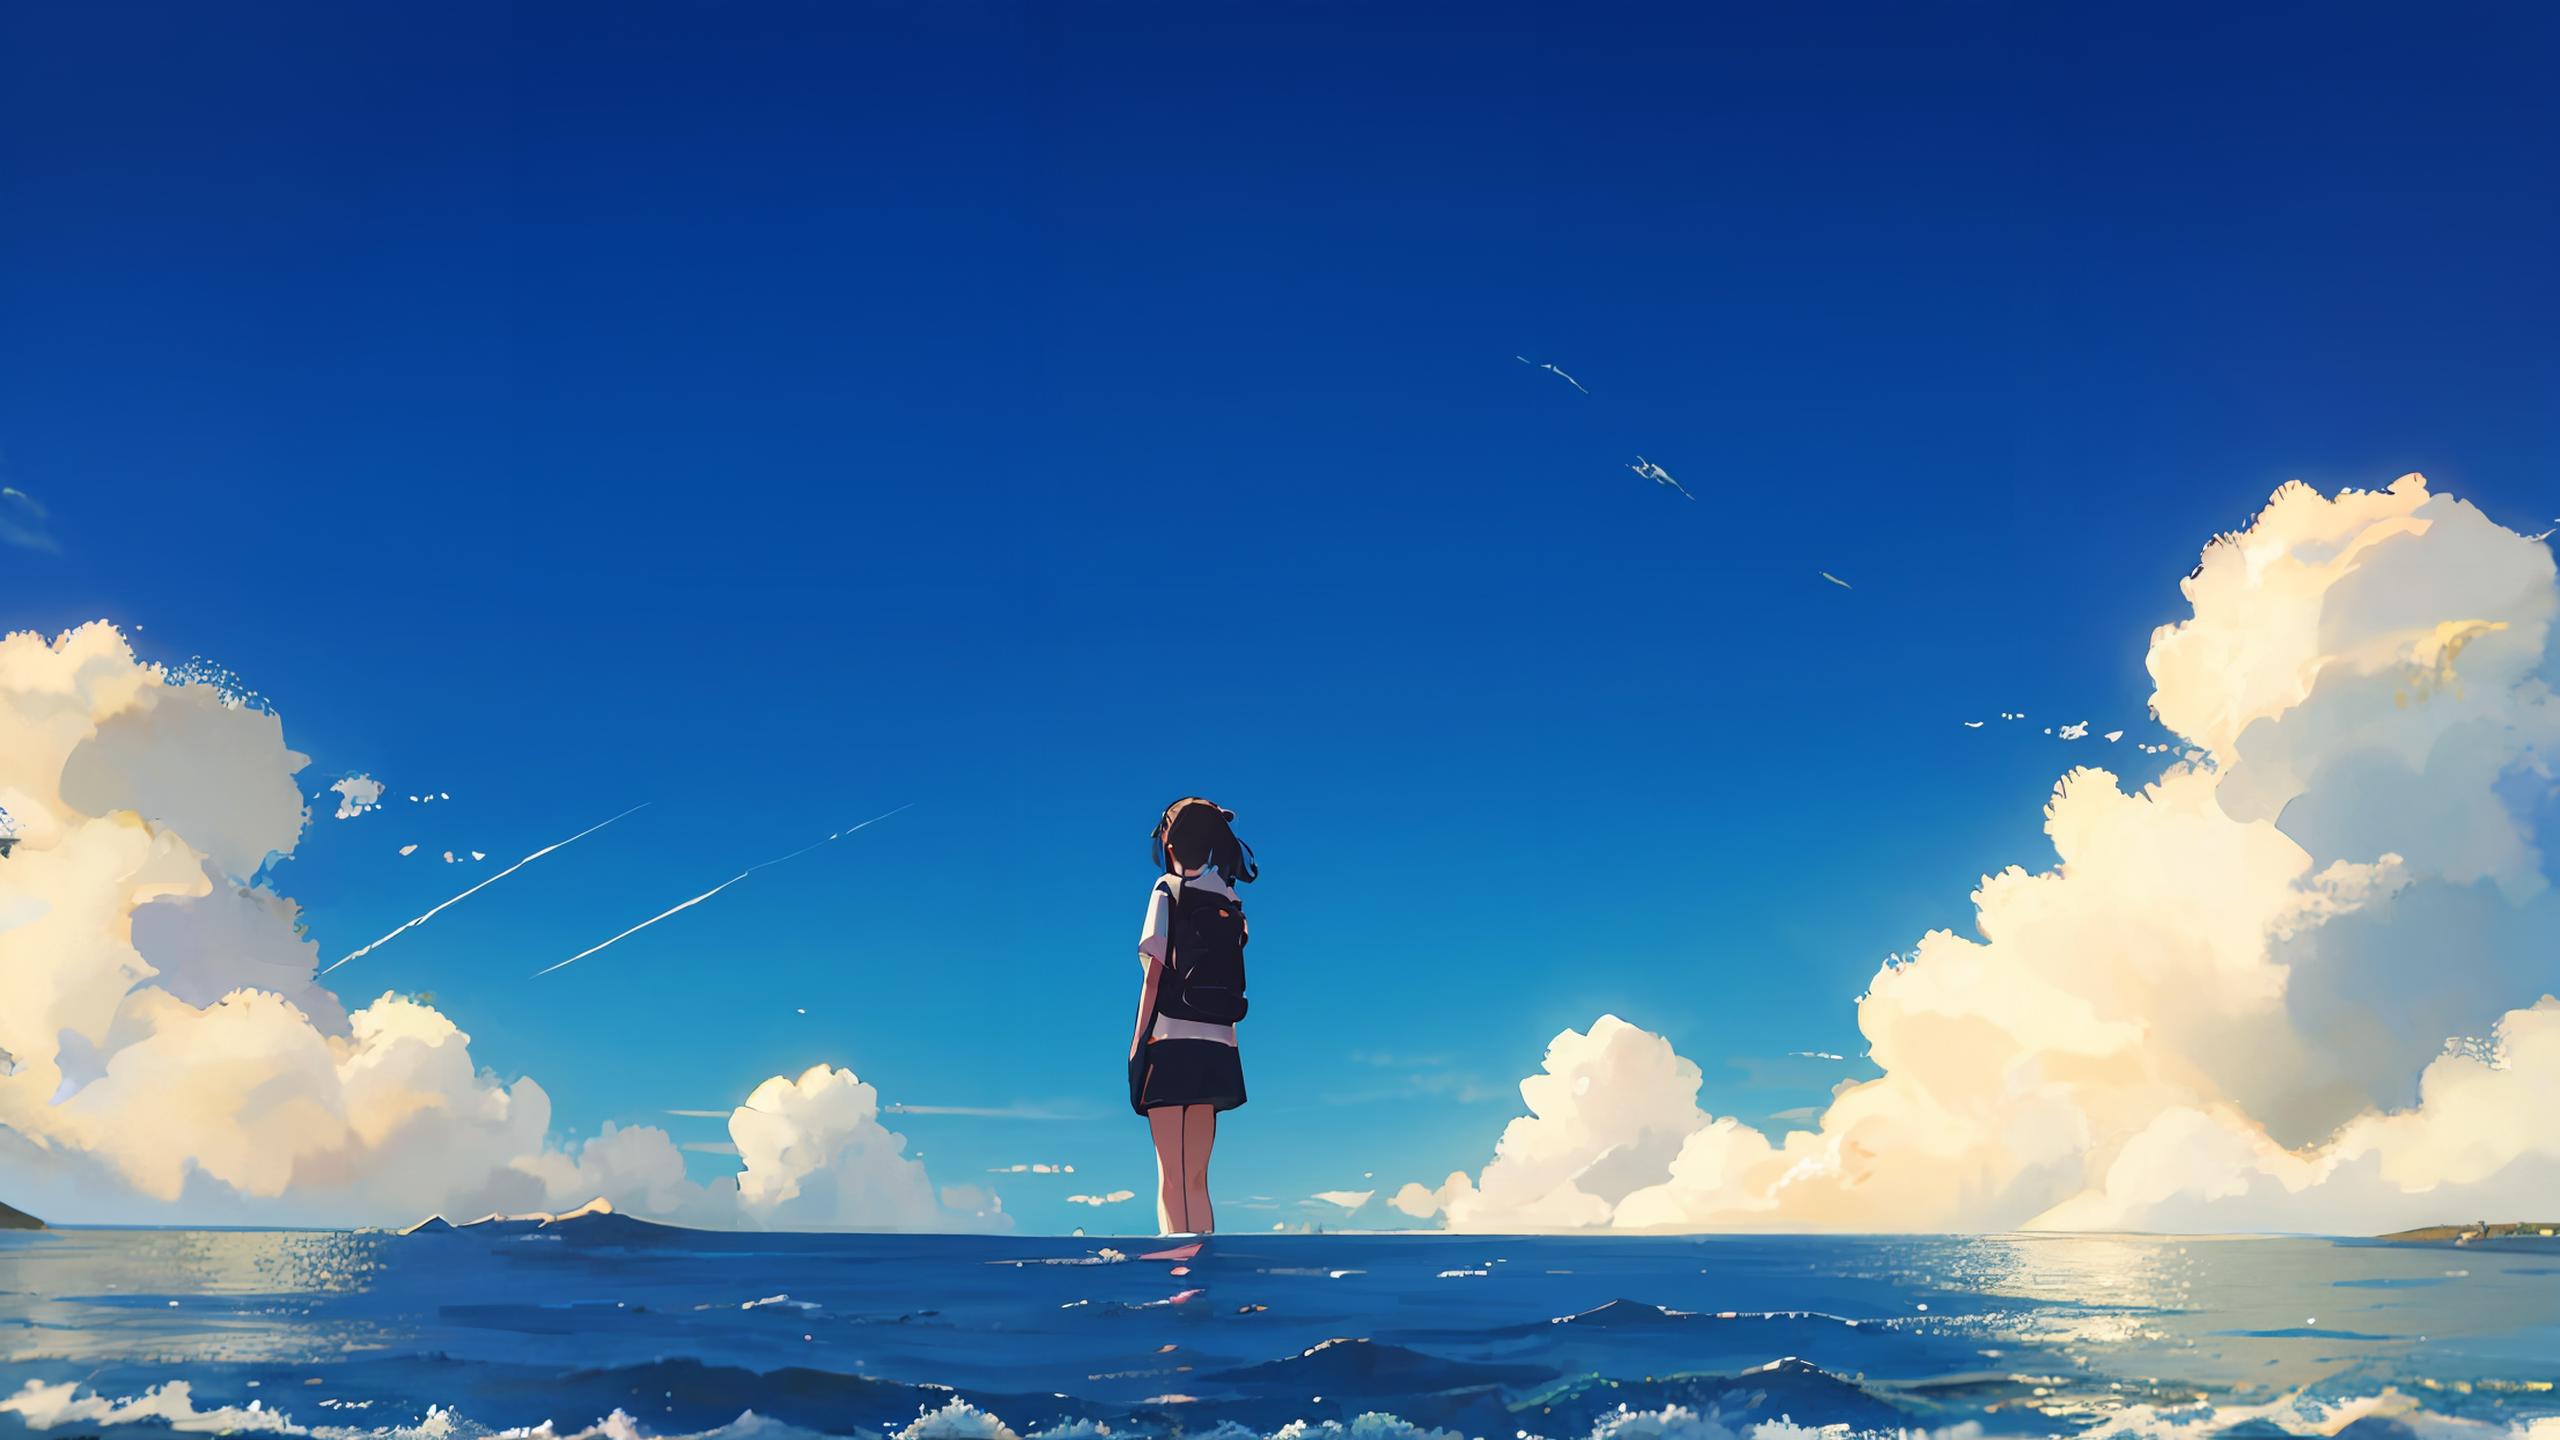 Makoto Shinkai (Your Name + substyles) Style LoRA image by yangzimix823